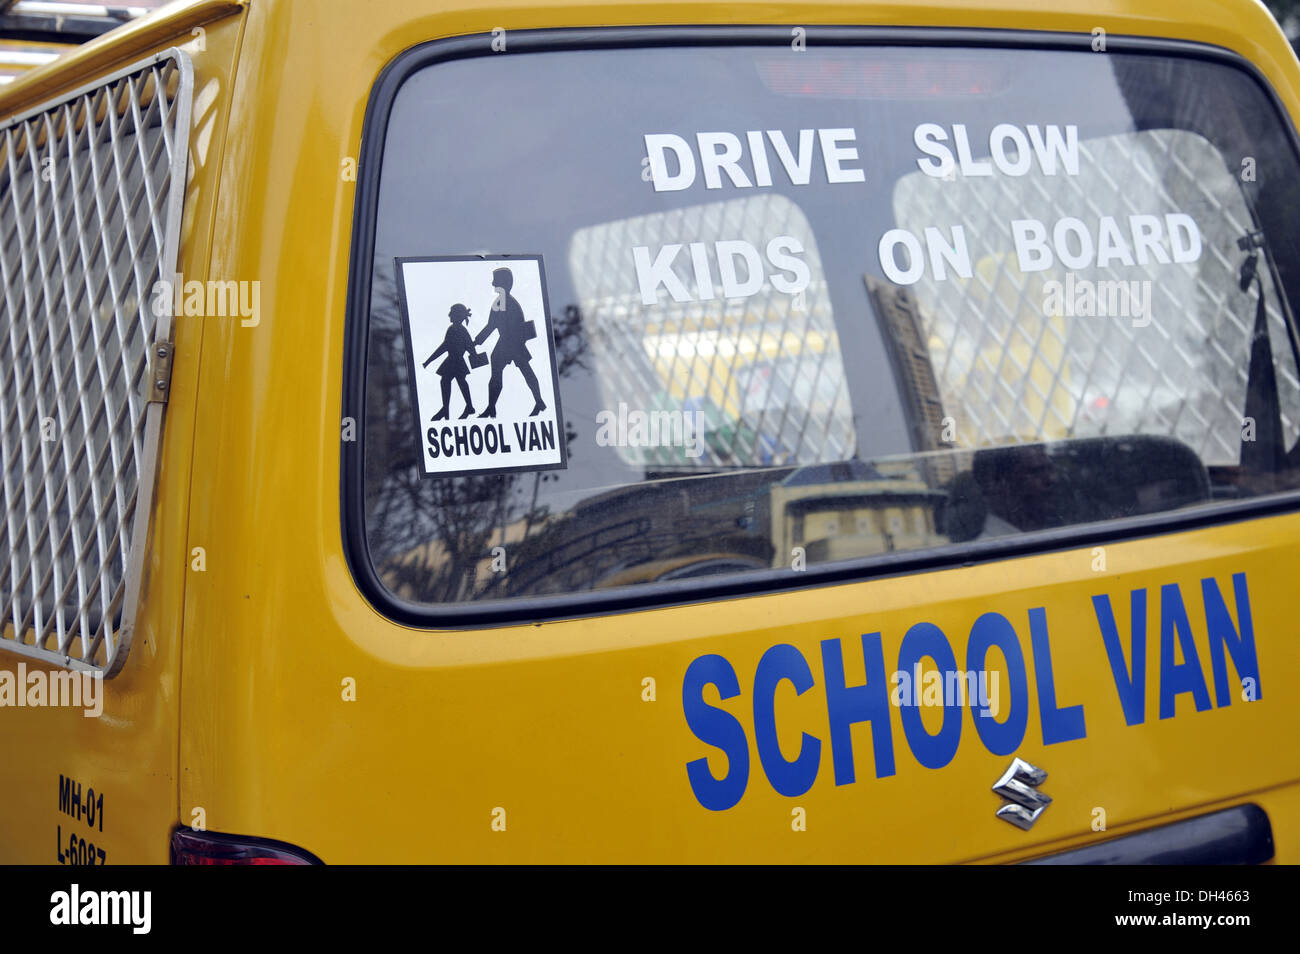 Fahren Sie langsam Kinder an Bord Schule van Symbole auf Bus in Mumbai, Maharashtra, Indien Stockfoto